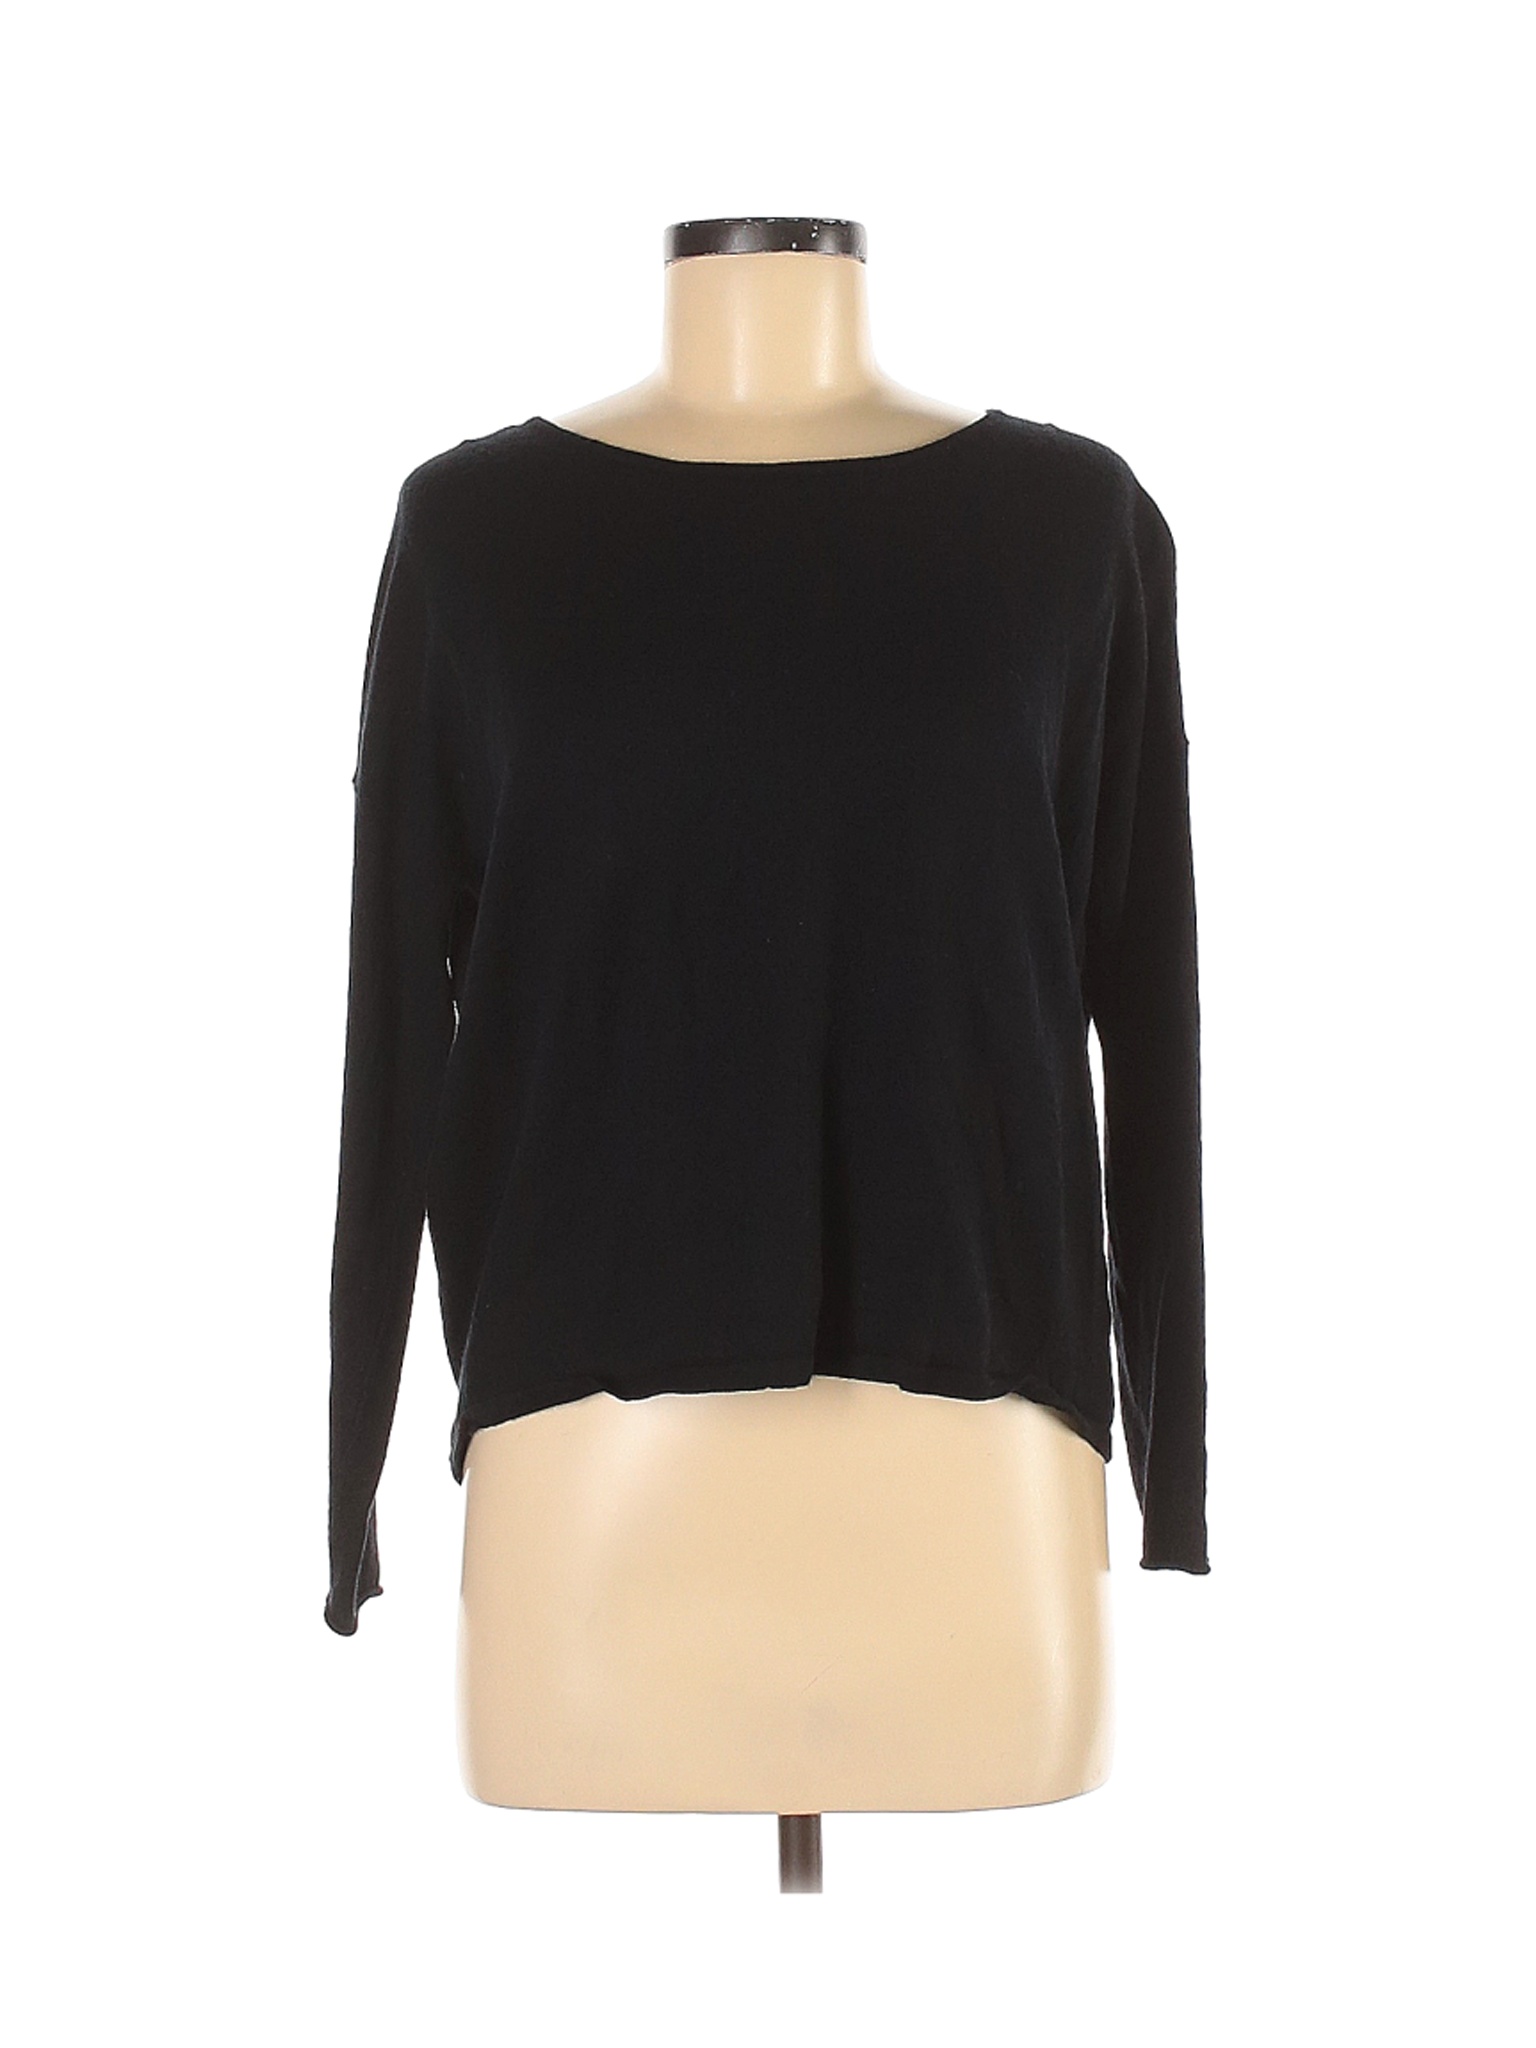 Tahari Women Black Wool Pullover Sweater M | eBay